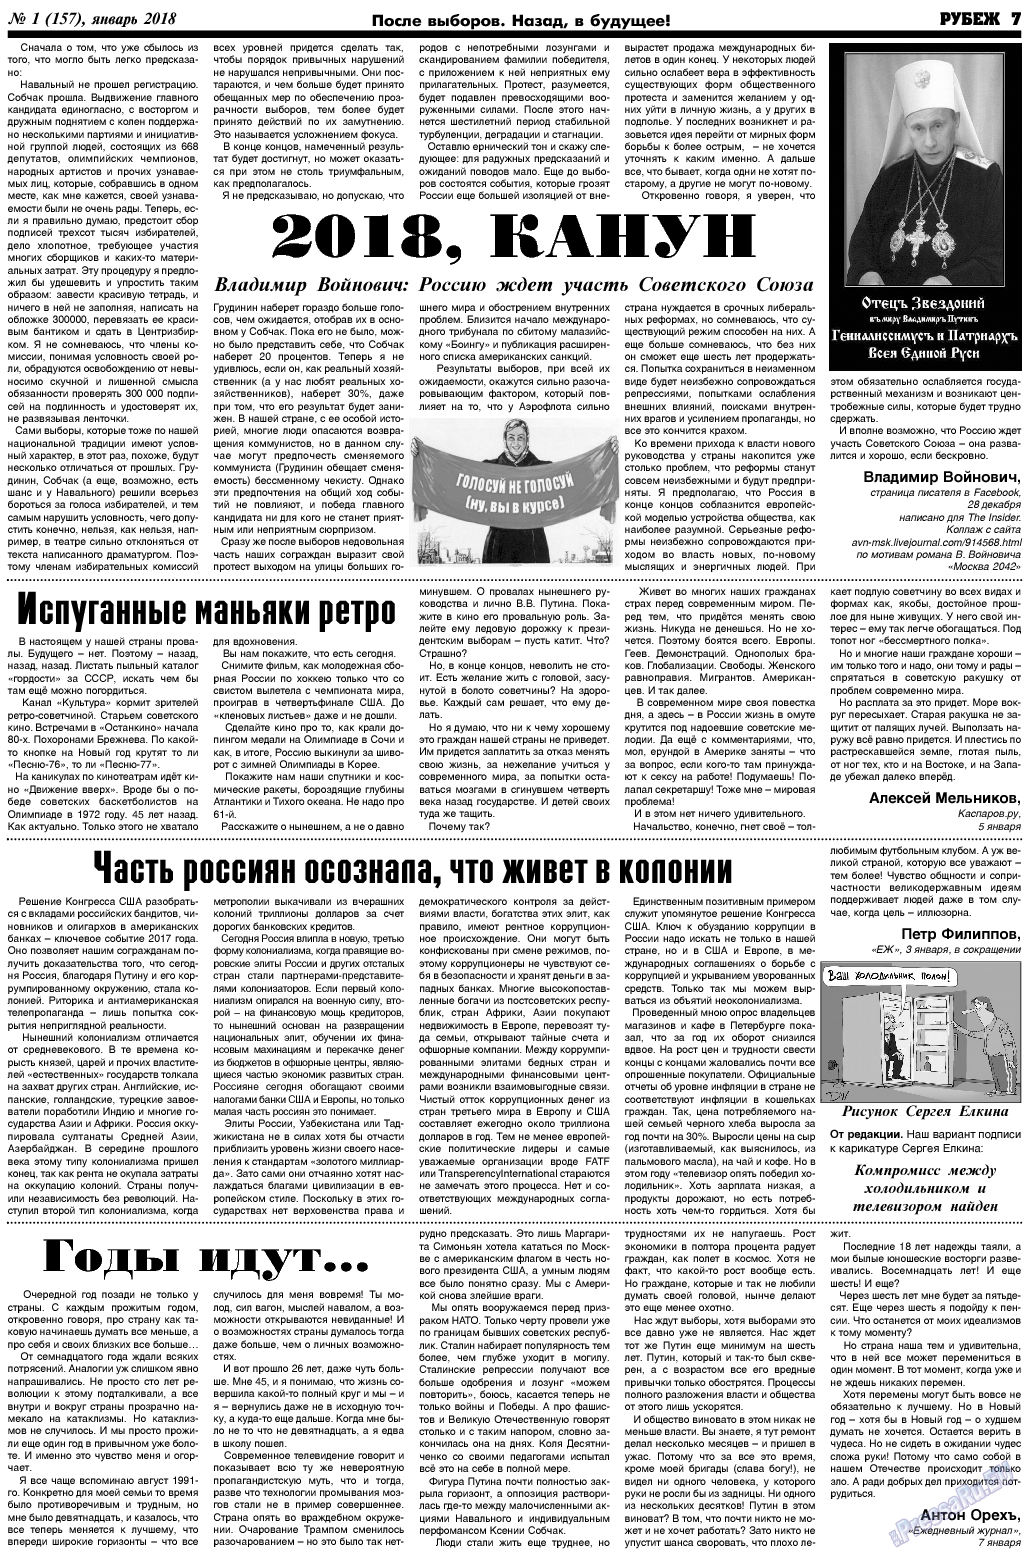 Рубеж, газета. 2018 №1 стр.7